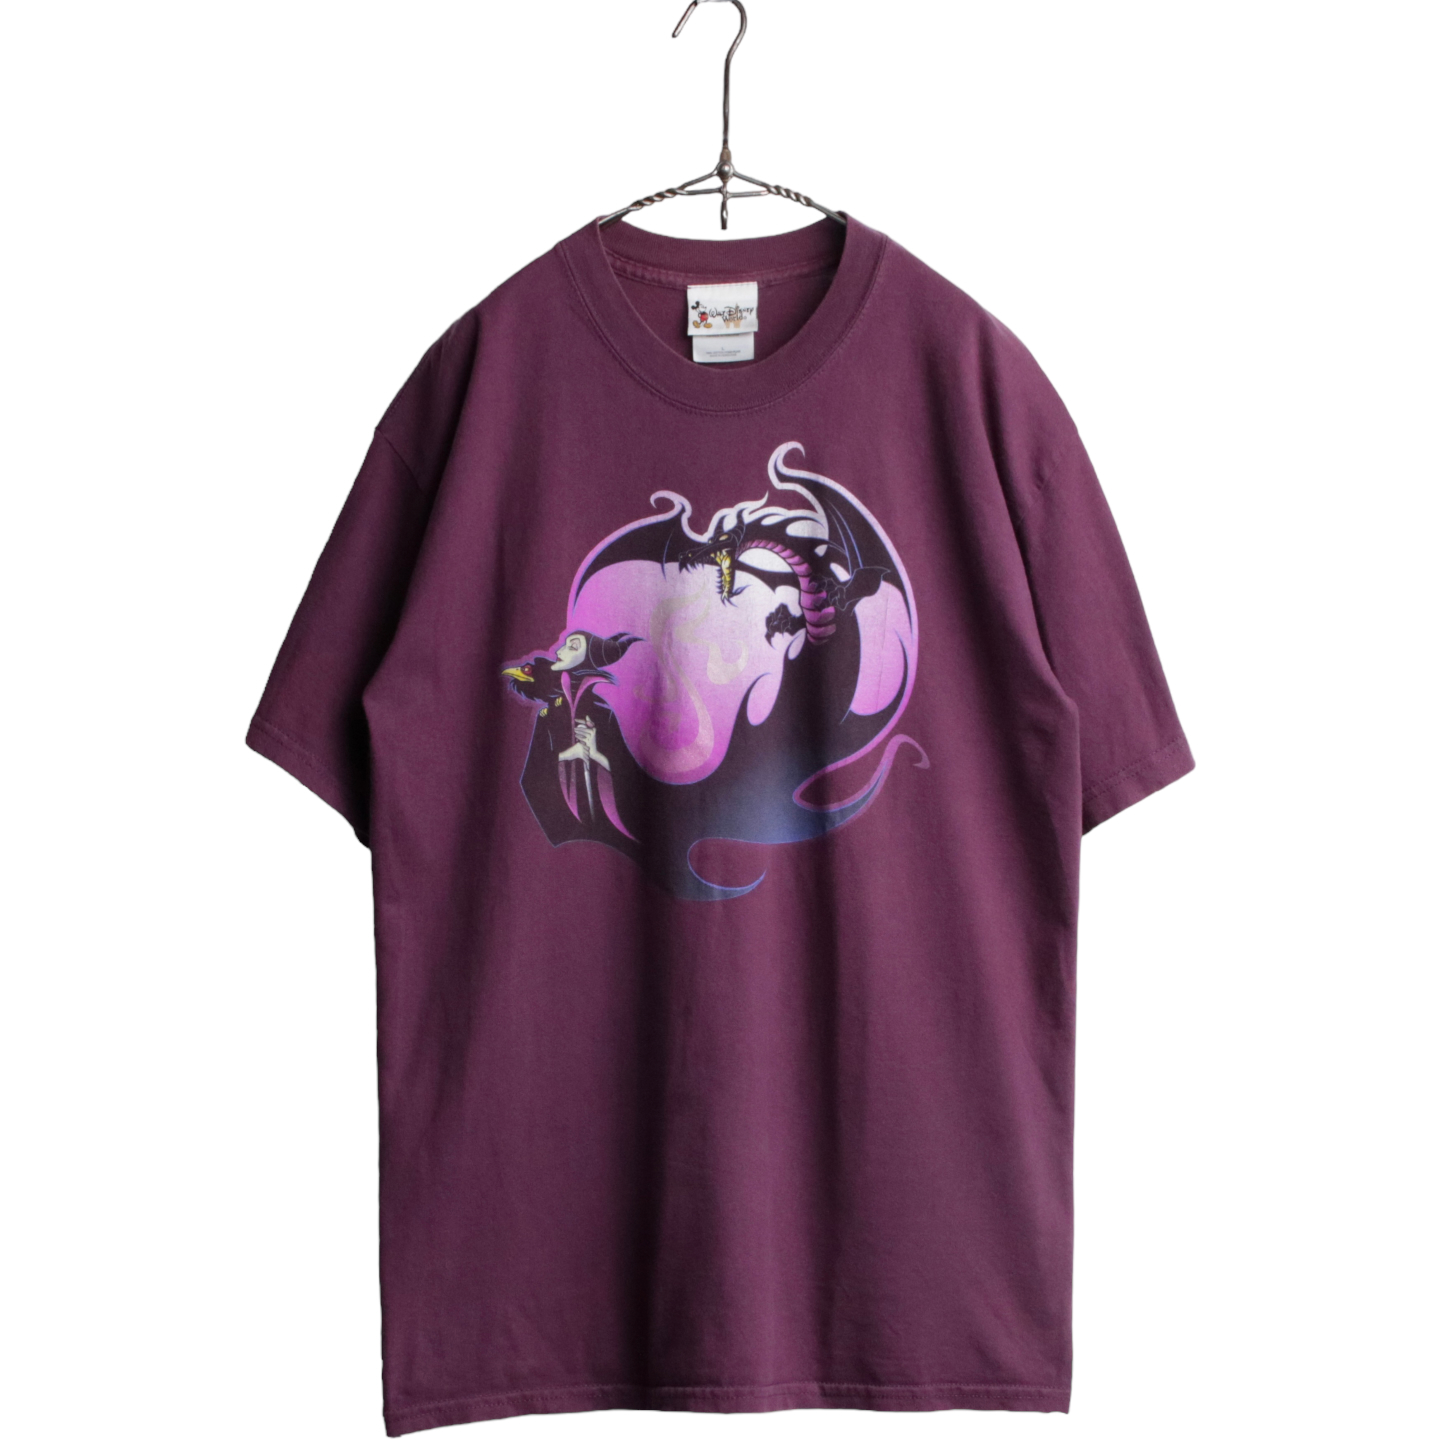 00s DISNEY ディズニー VILLANS マレフィセント キャラクター Tシャツ 眠れる森の美女 紫 L